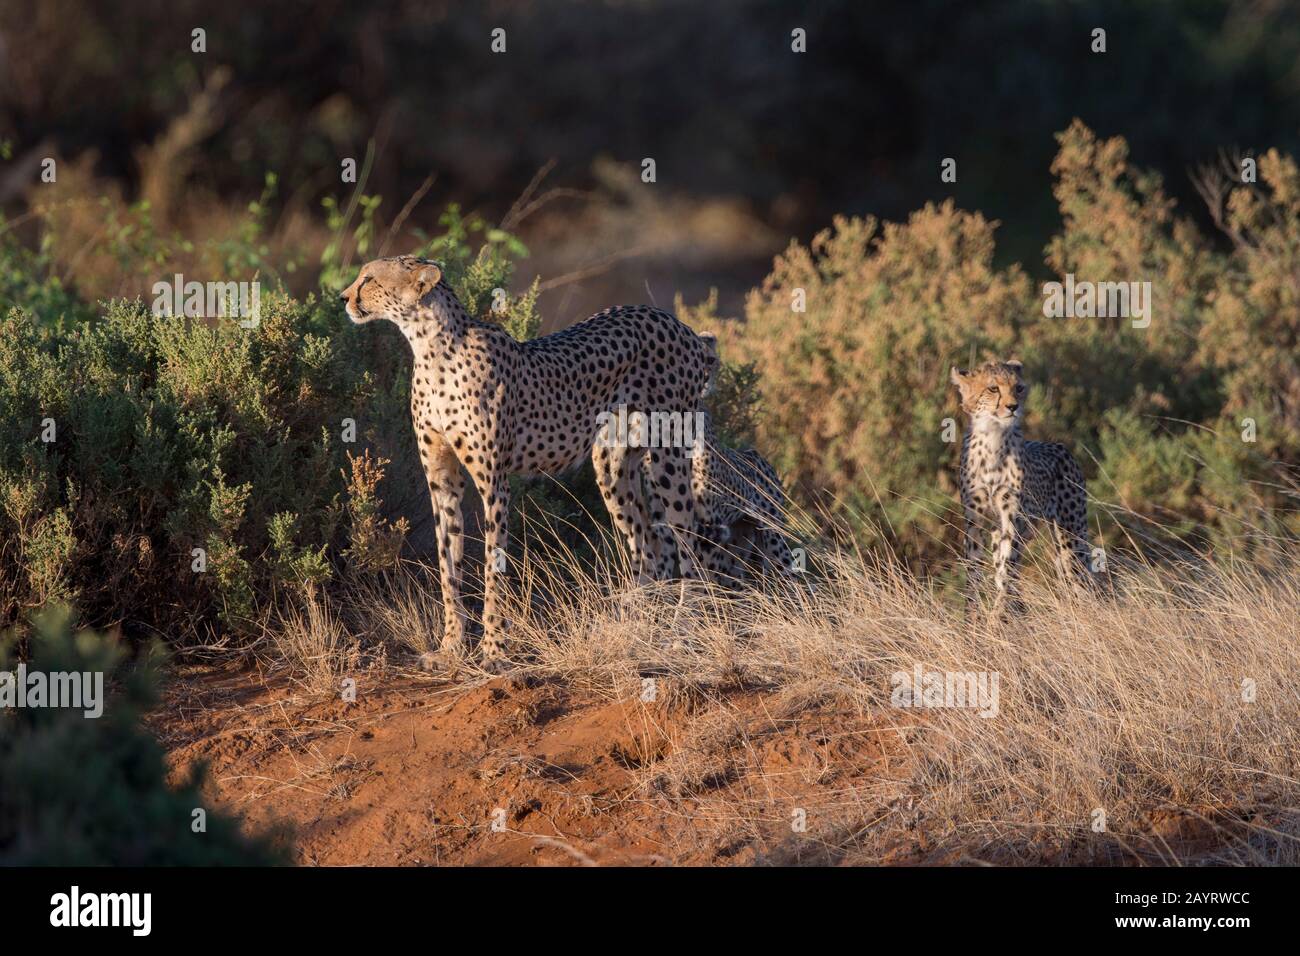 A Cheetah (Acinonyx jubatus) mother with cubs is looking for prey in the Samburu National Reserve in Kenya. Stock Photo